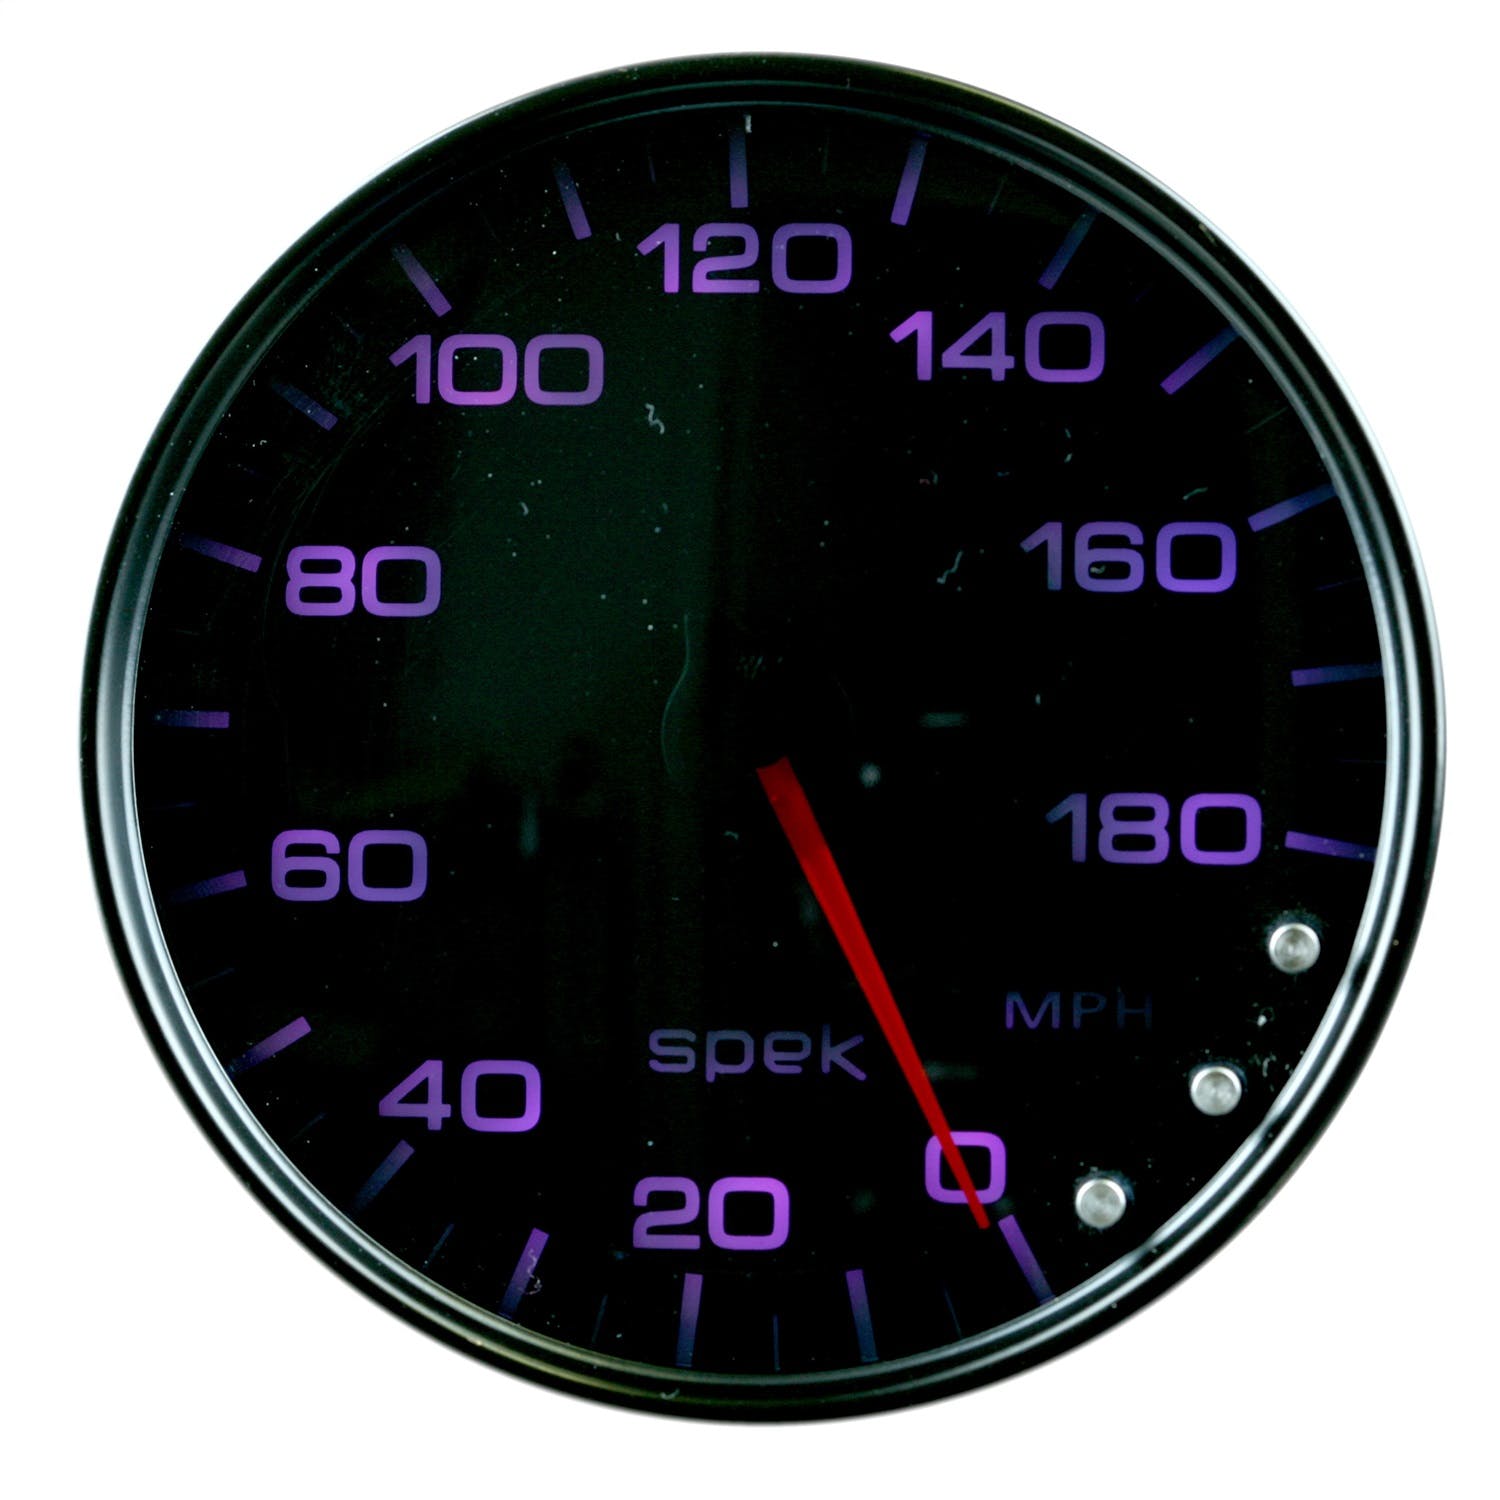 AutoMeter Products P23052 Spek Pro Speedometer Gauge, 5, 180 MPH, Electric Programmable Black/Smoke/Black